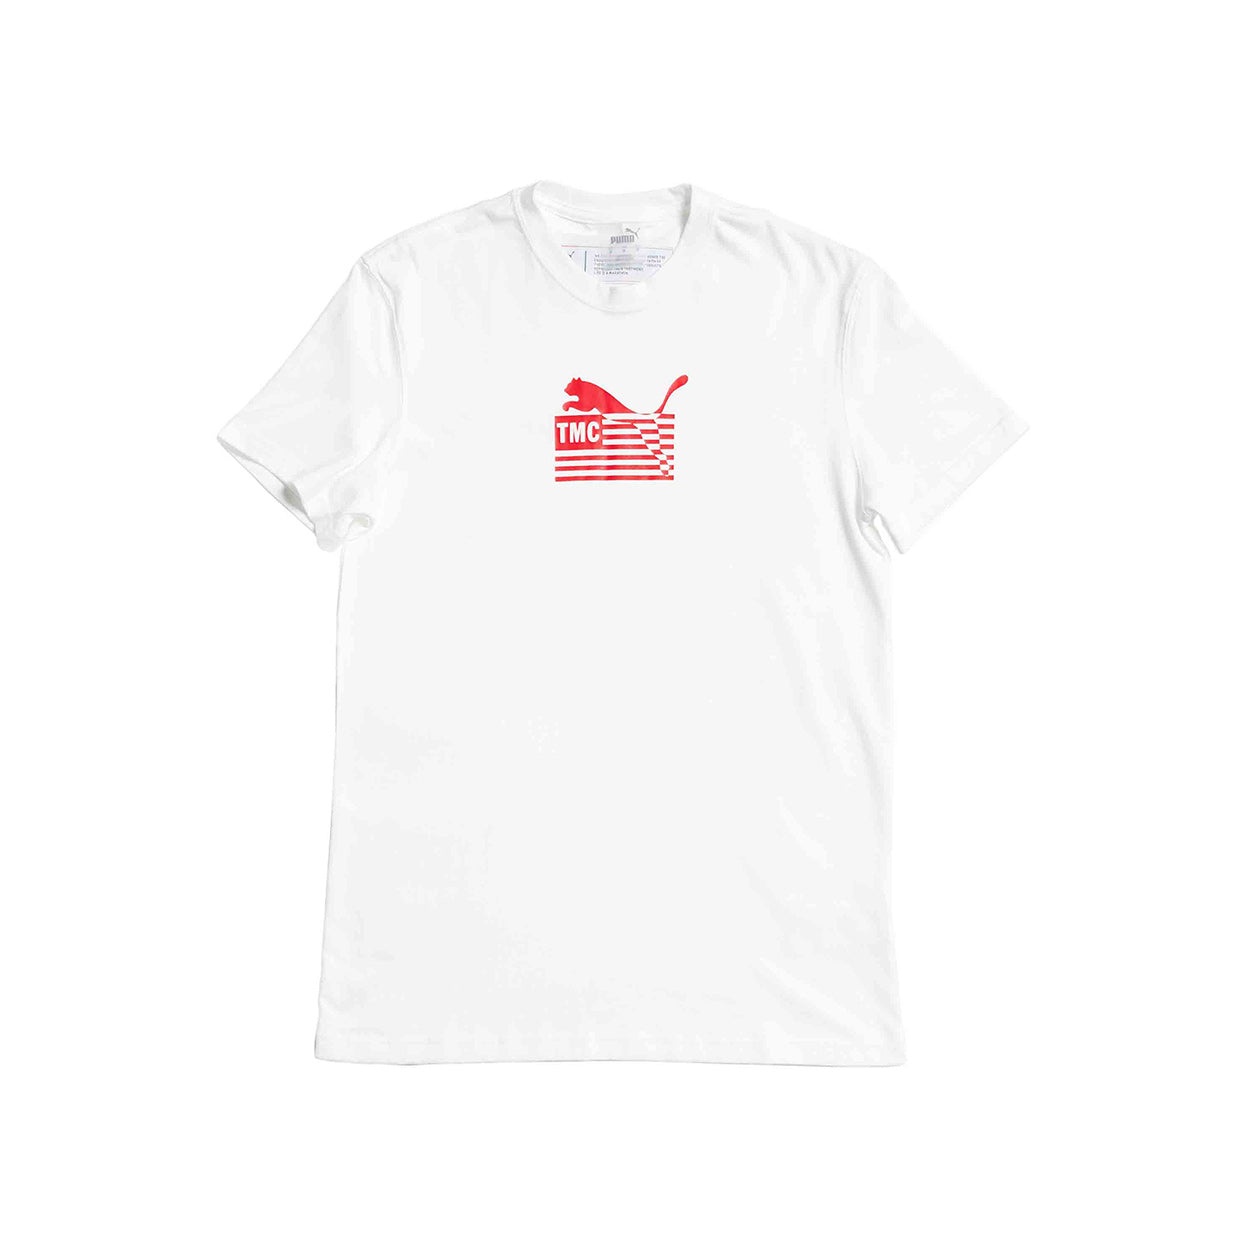 Puma White/Red Clothing The - TMC – Marathon T-shirt x